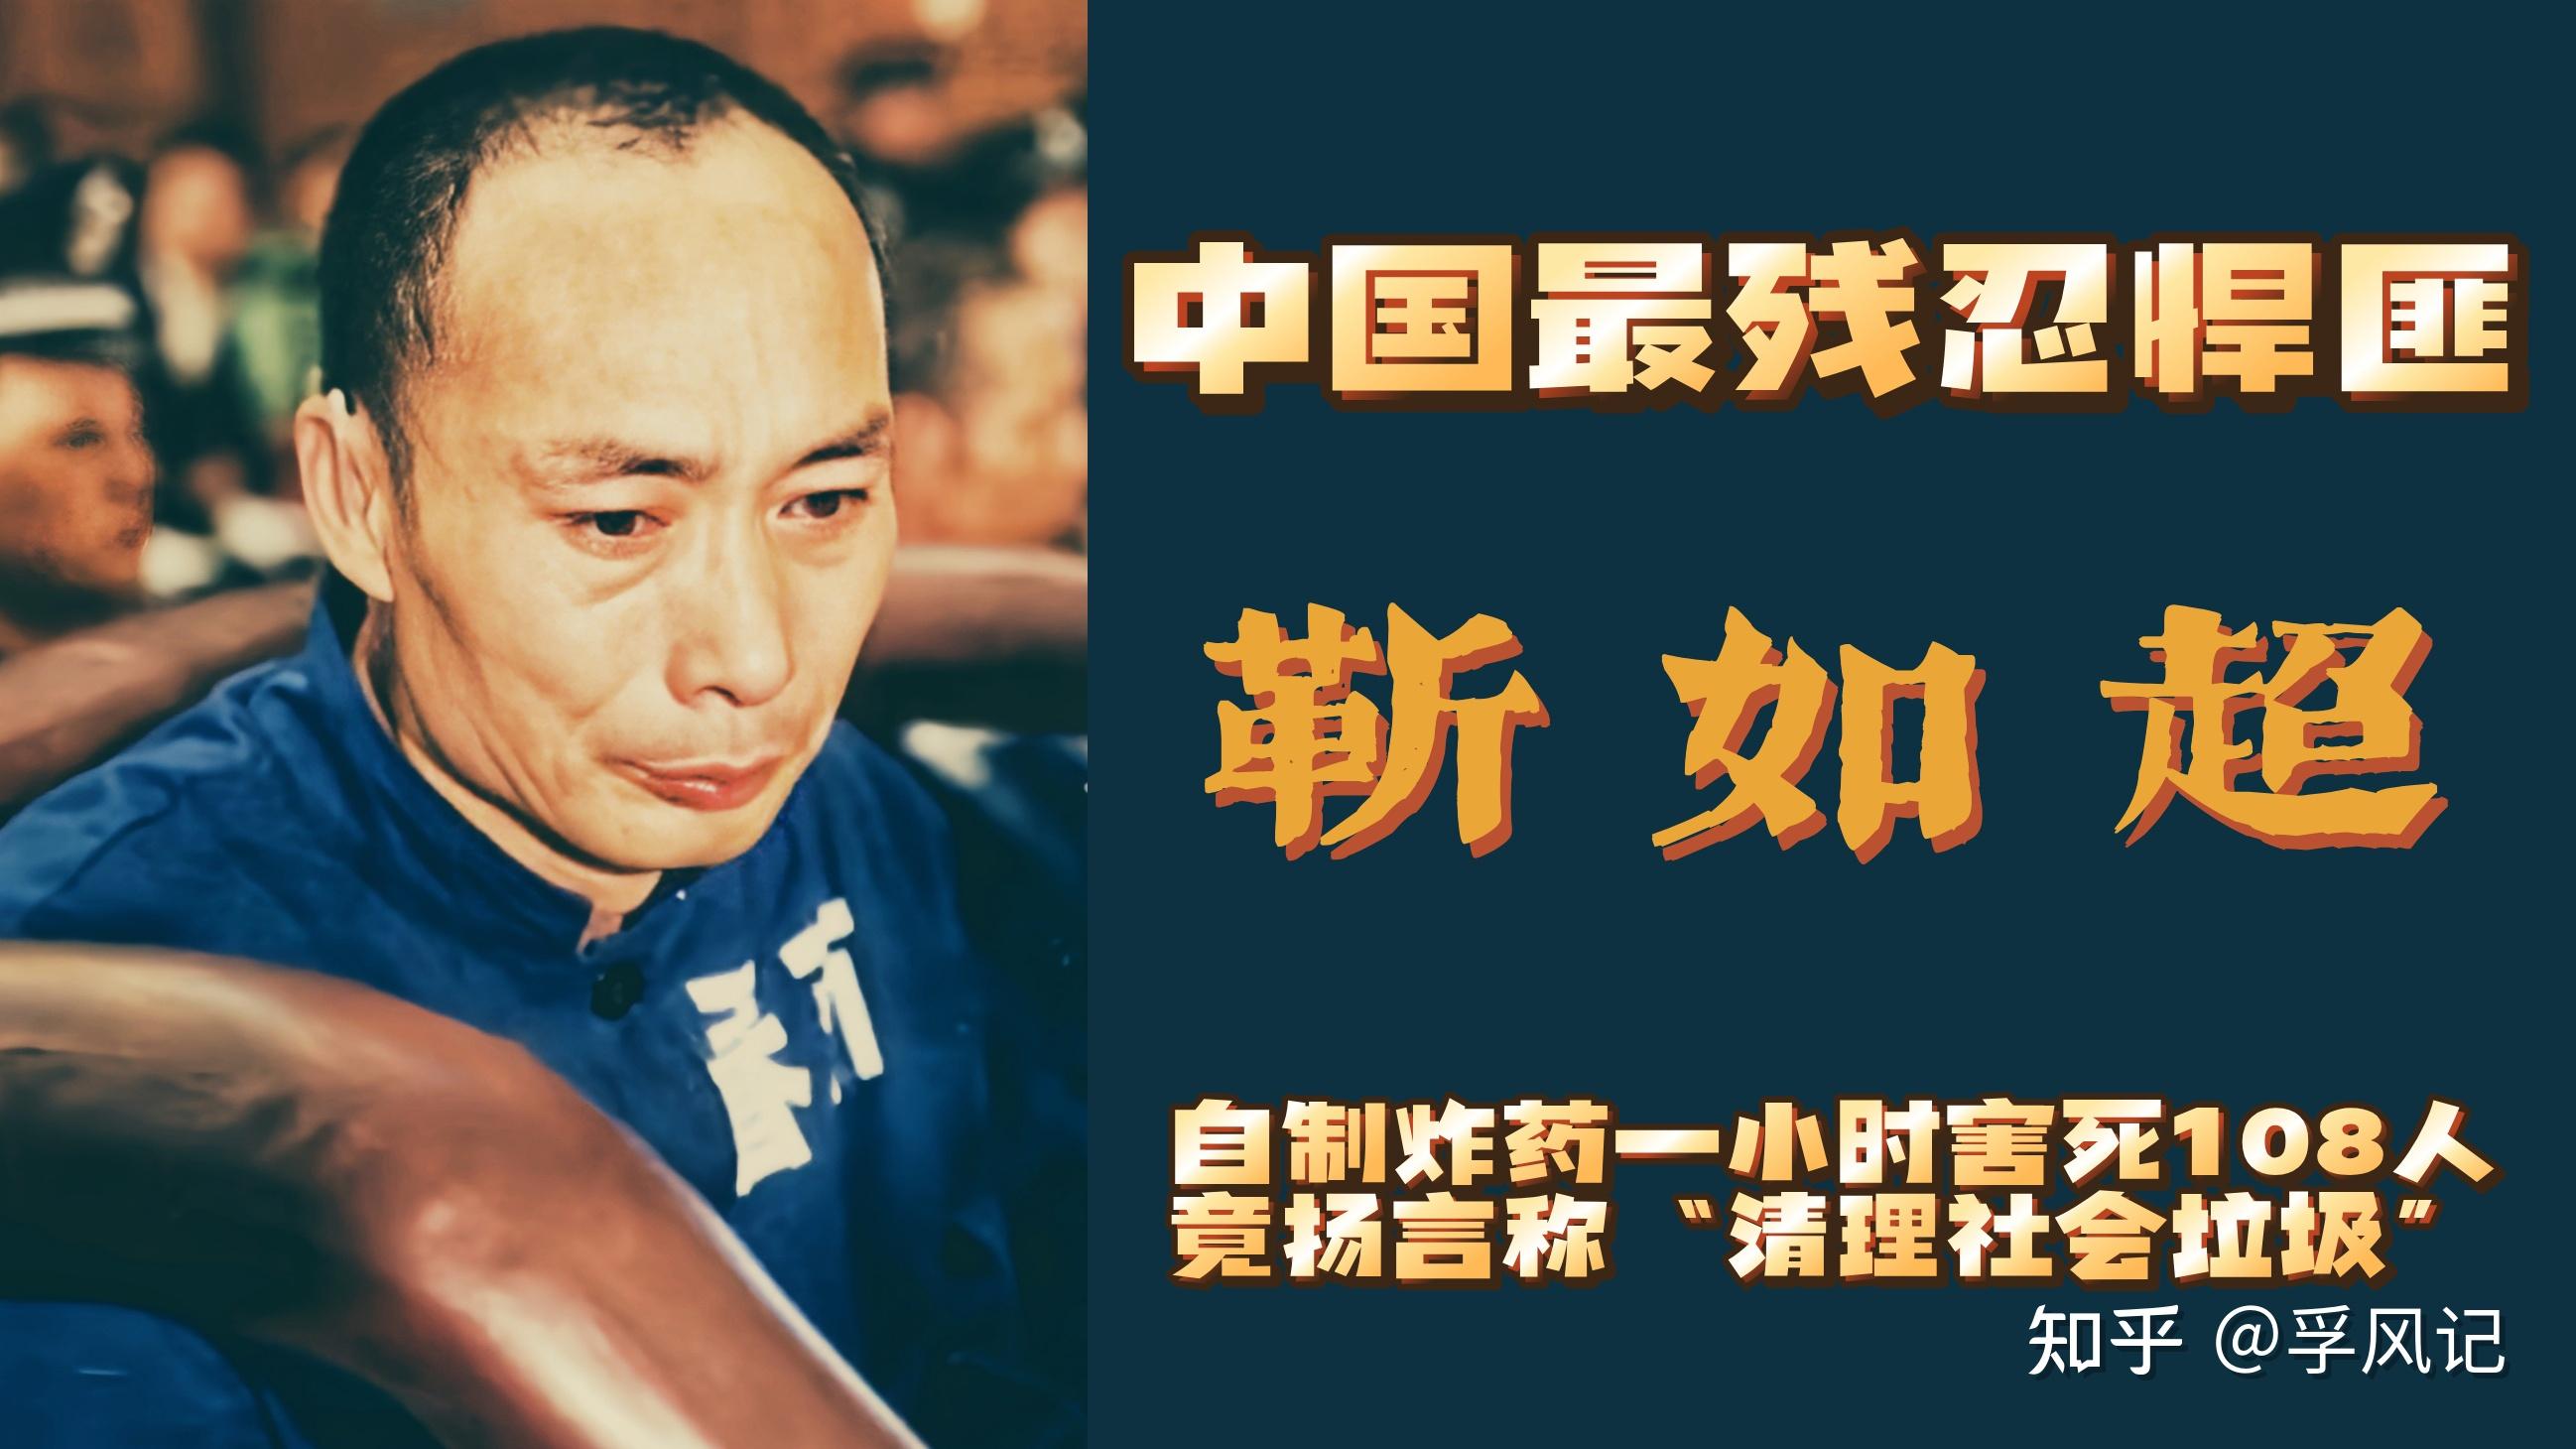 《legal high》经典案例“坪仓故意杀人案”的中国证据法分析-搜狐大视野-搜狐新闻